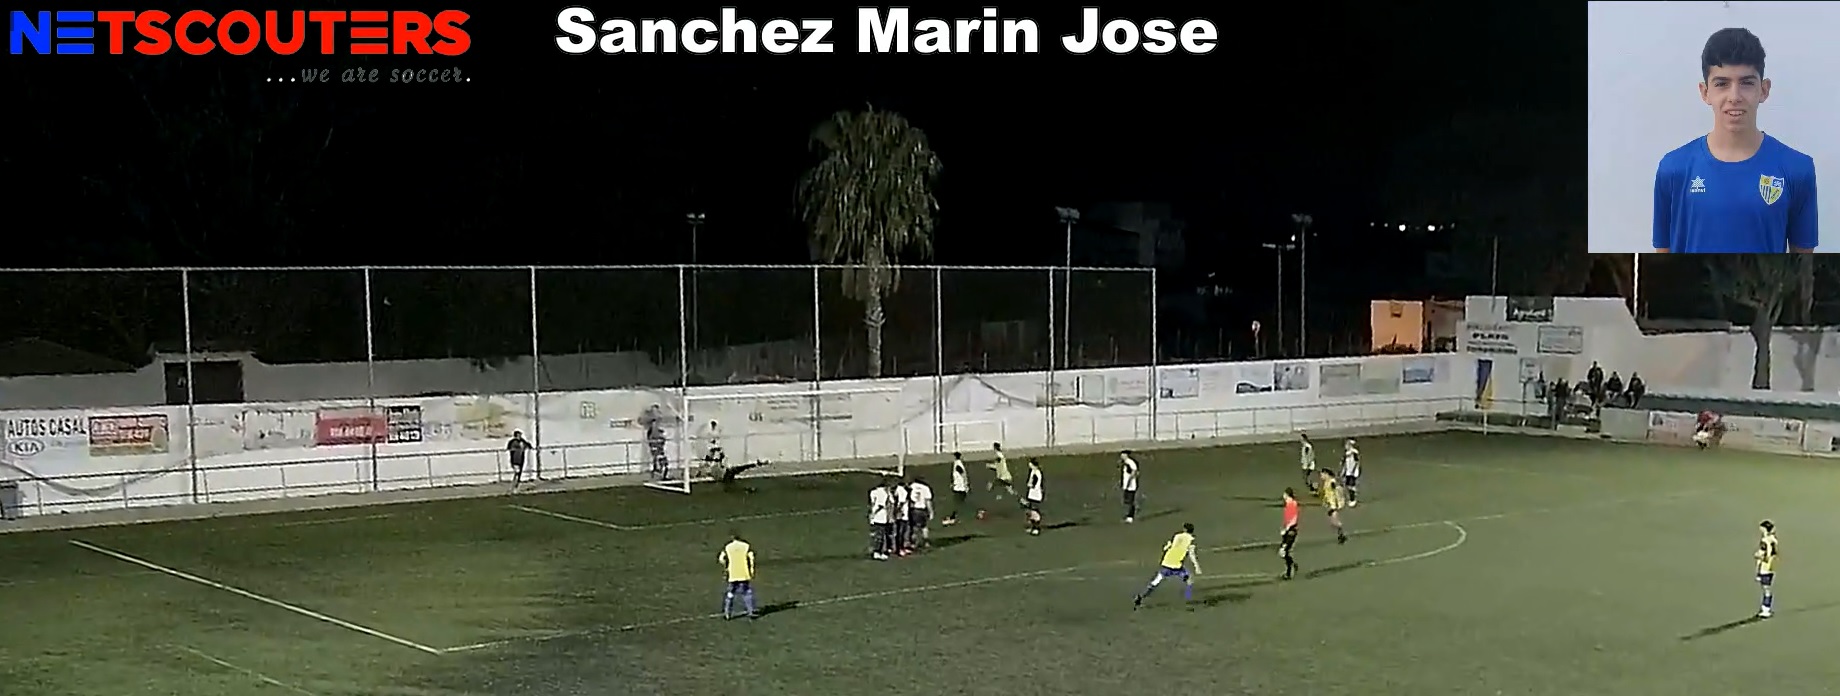 Sanchez Marin Jose